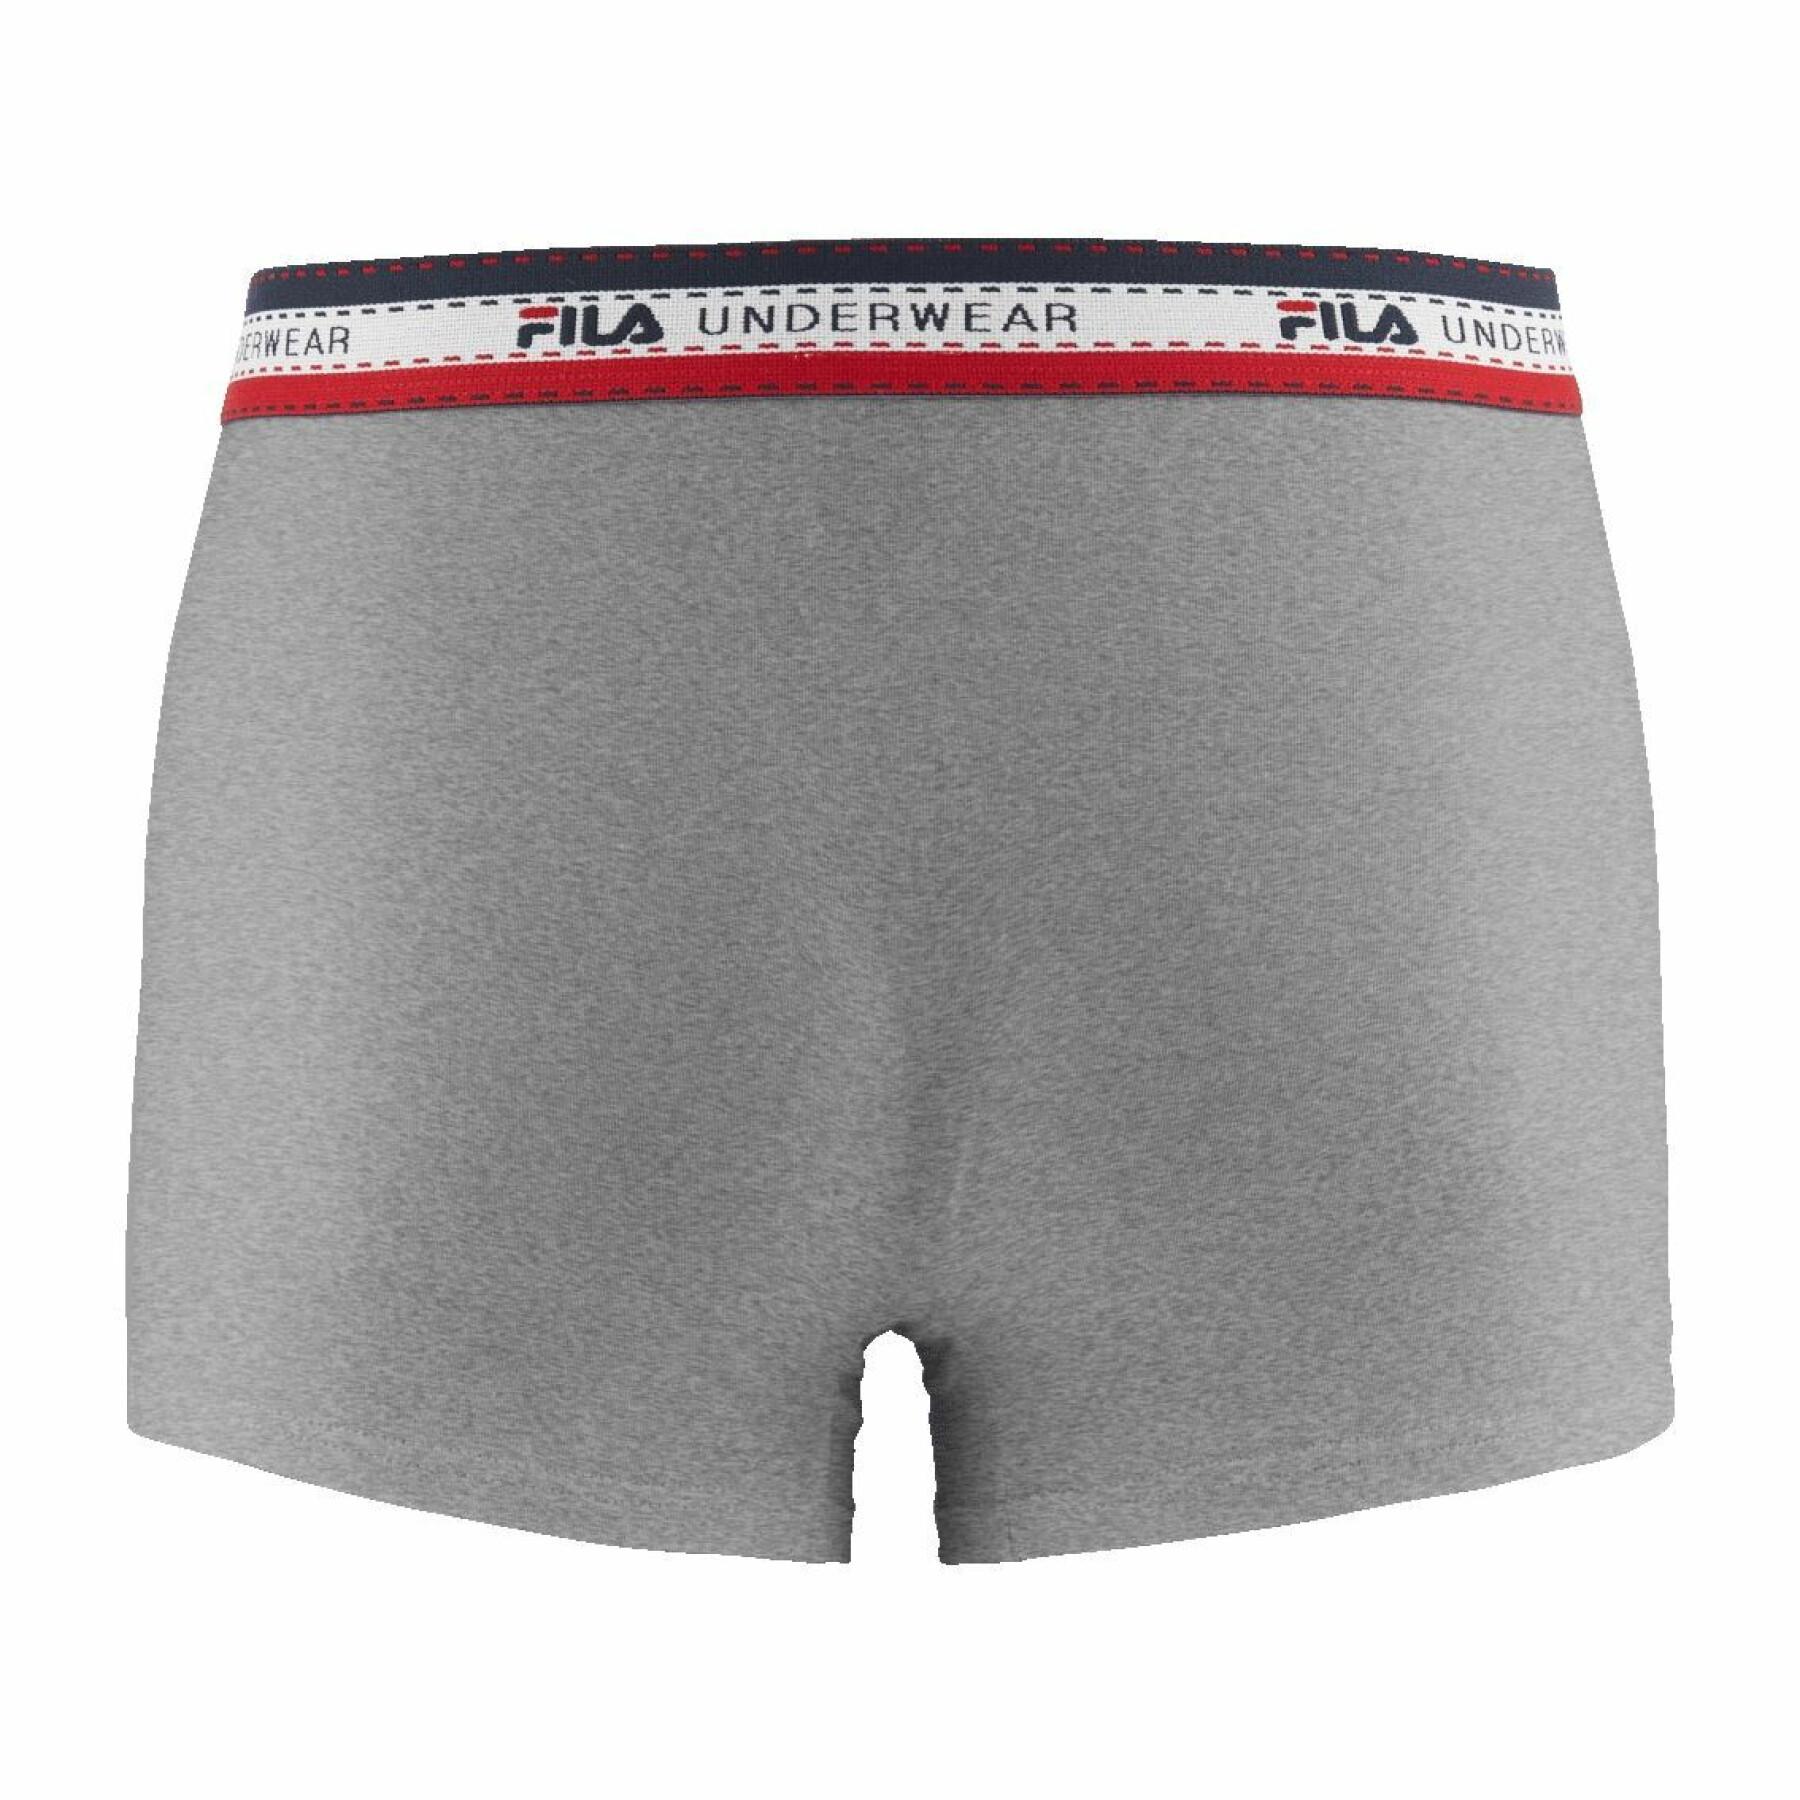 Cotton boxer shorts Fila